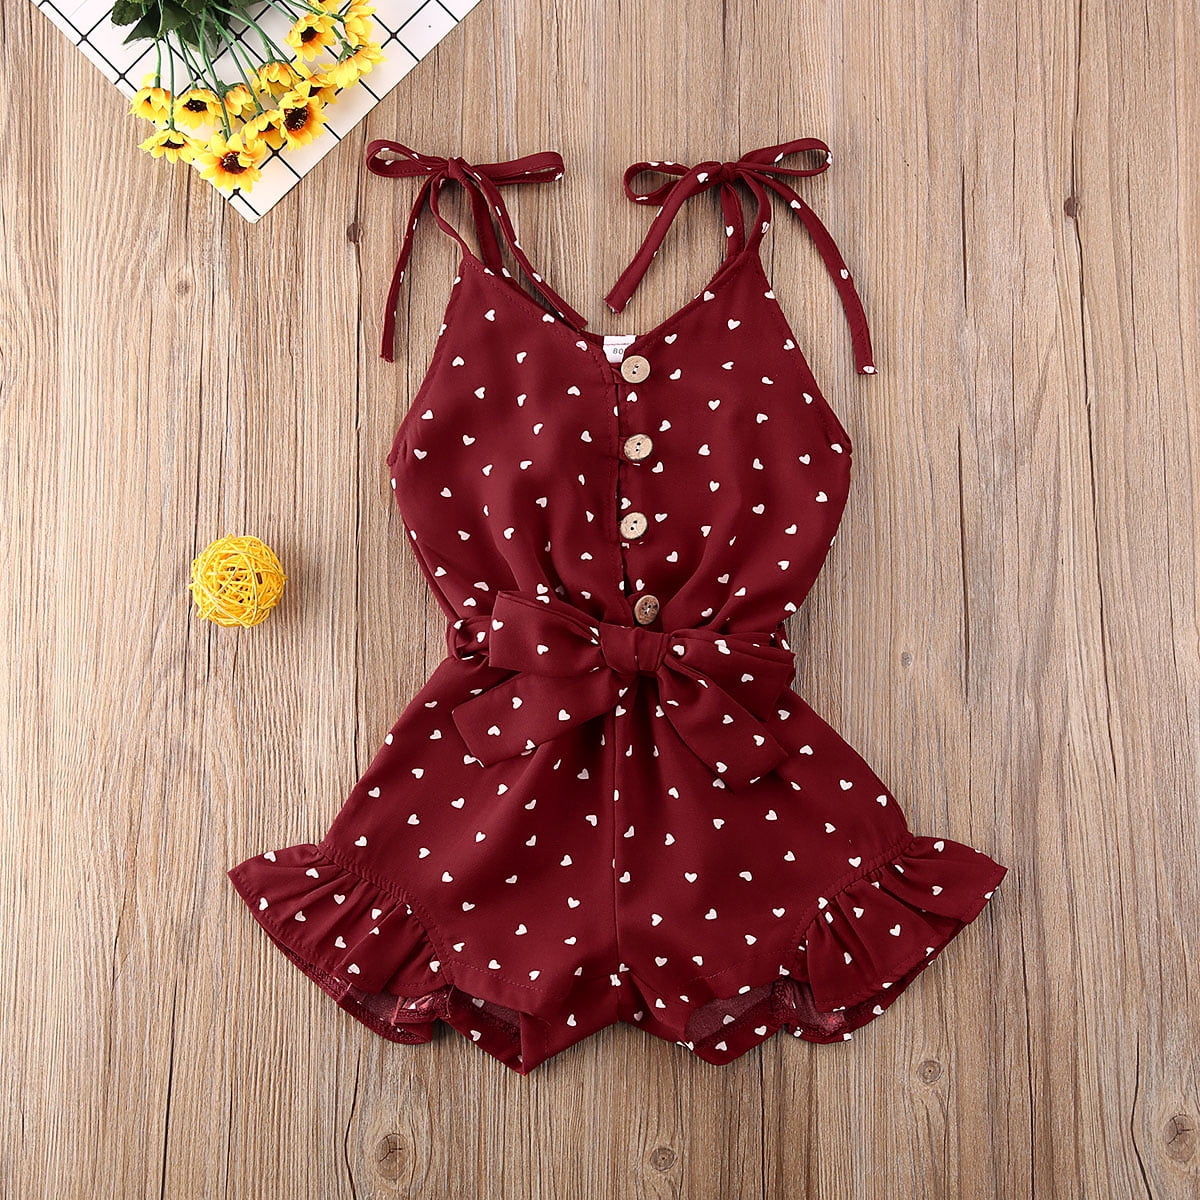 Dadaryeong Toddler Baby Girl Polka Dot Print Strap Drawstring Romper Overalls Bodysuit Jumpsuit Summer Outfits 